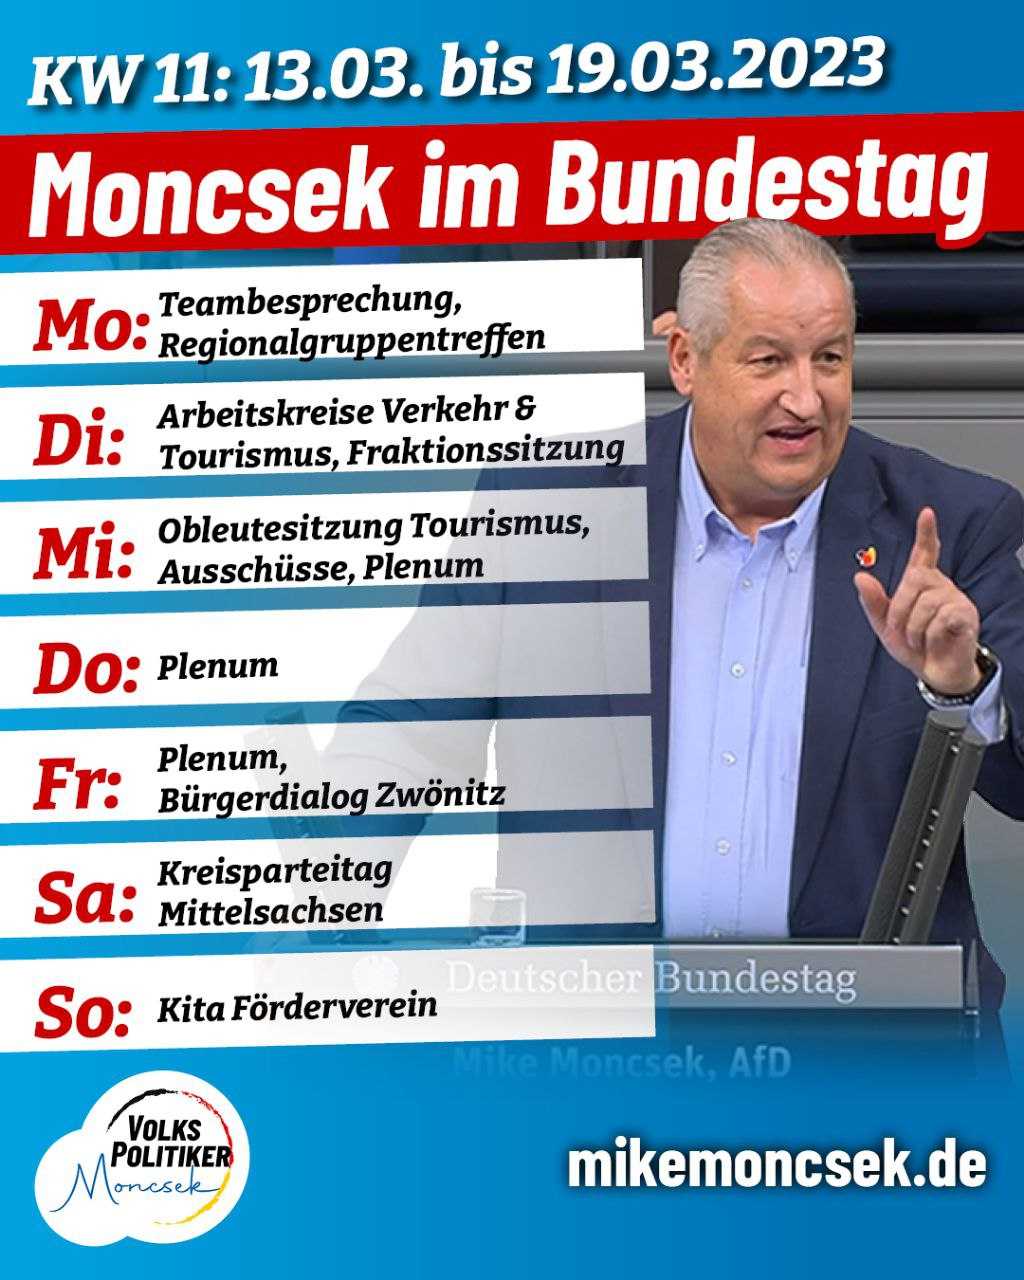 MONCSEK im Bundestag - KW 11: 13.03.-19.03.2023